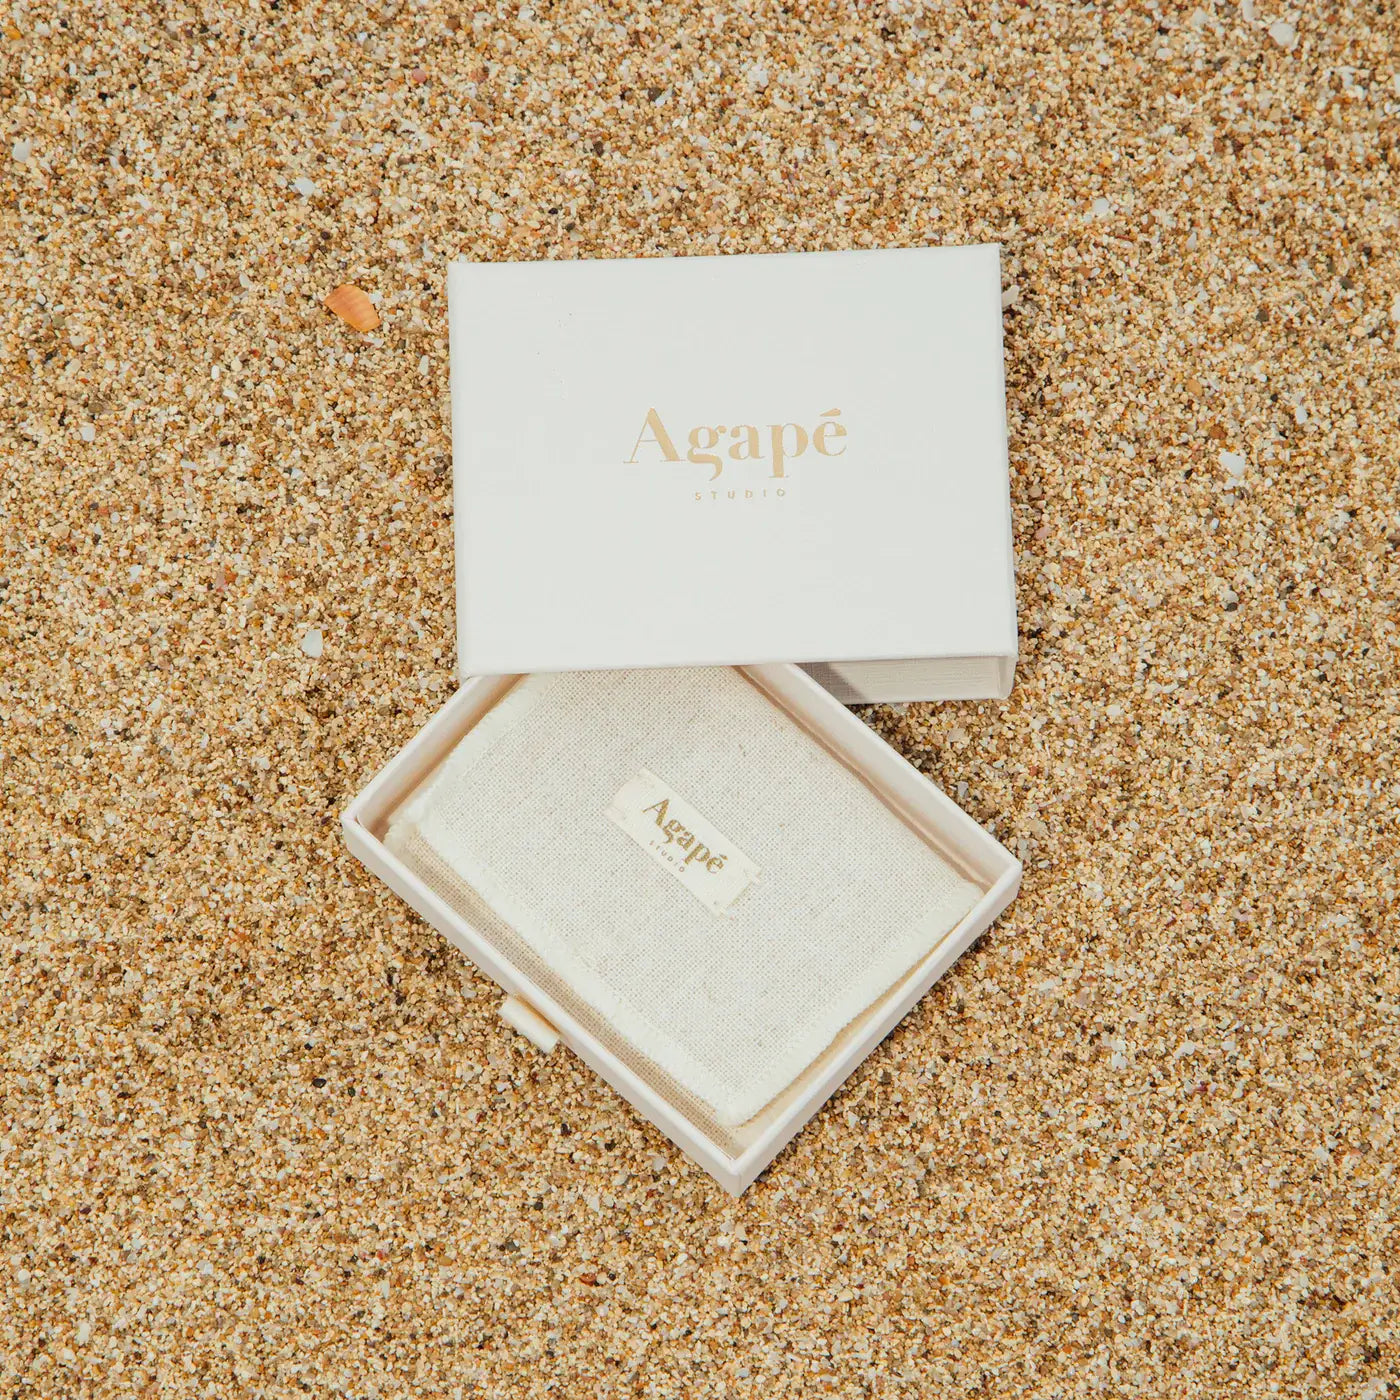 Agapé Studio Jewelry - Cala Earrings